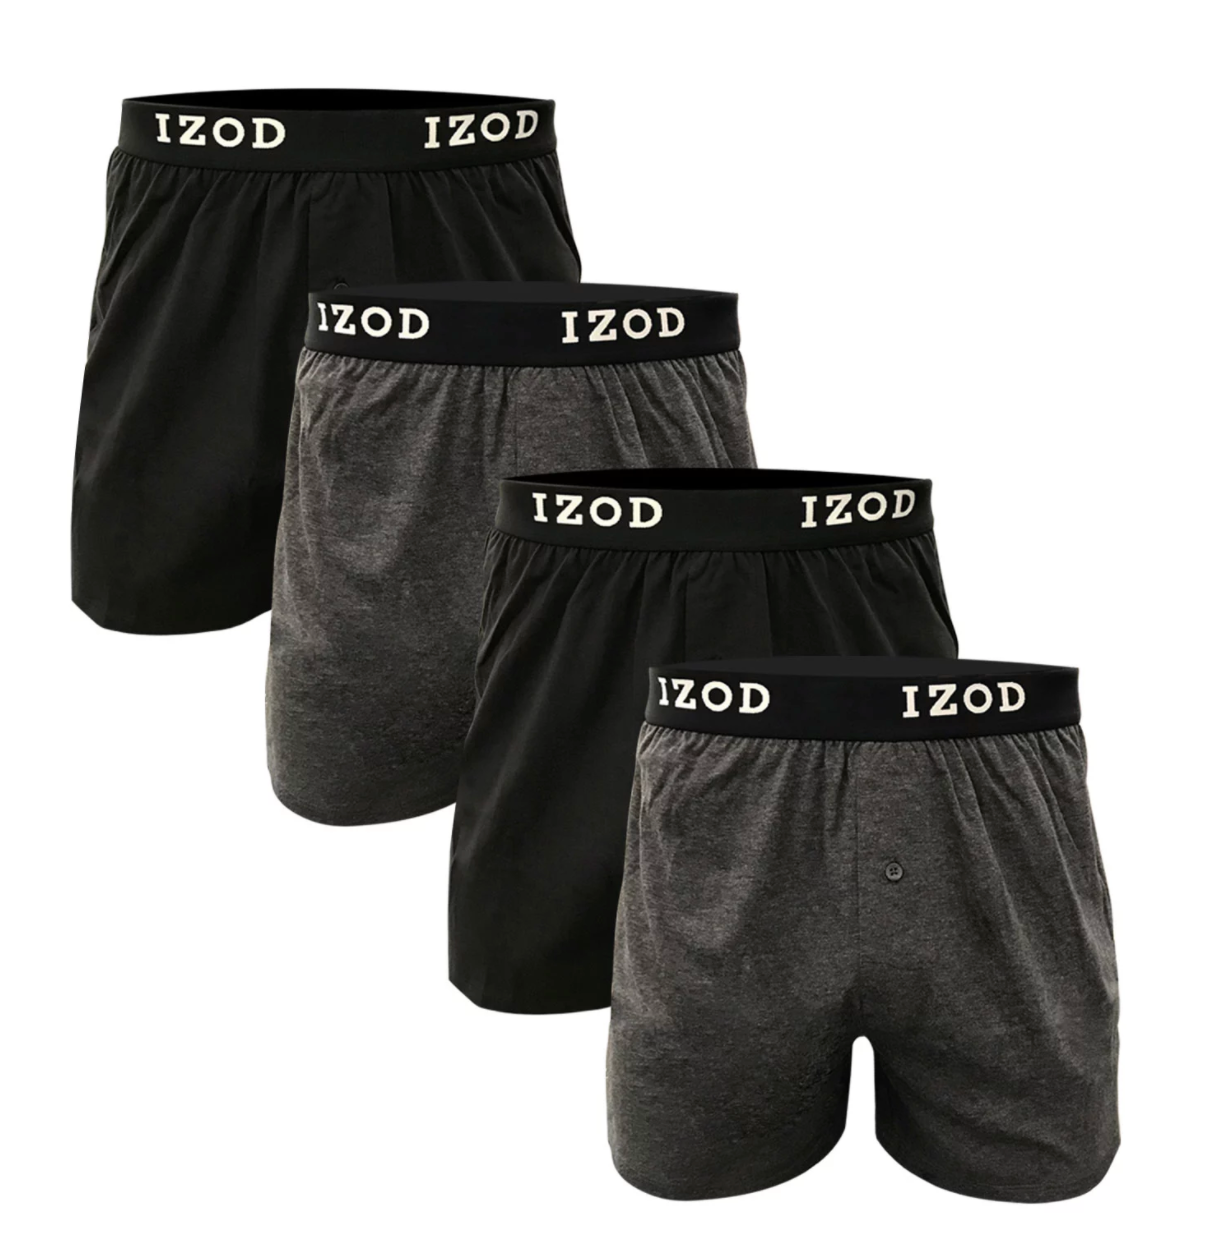 IZOD Men's Boxer Briefs, 3-Pack 